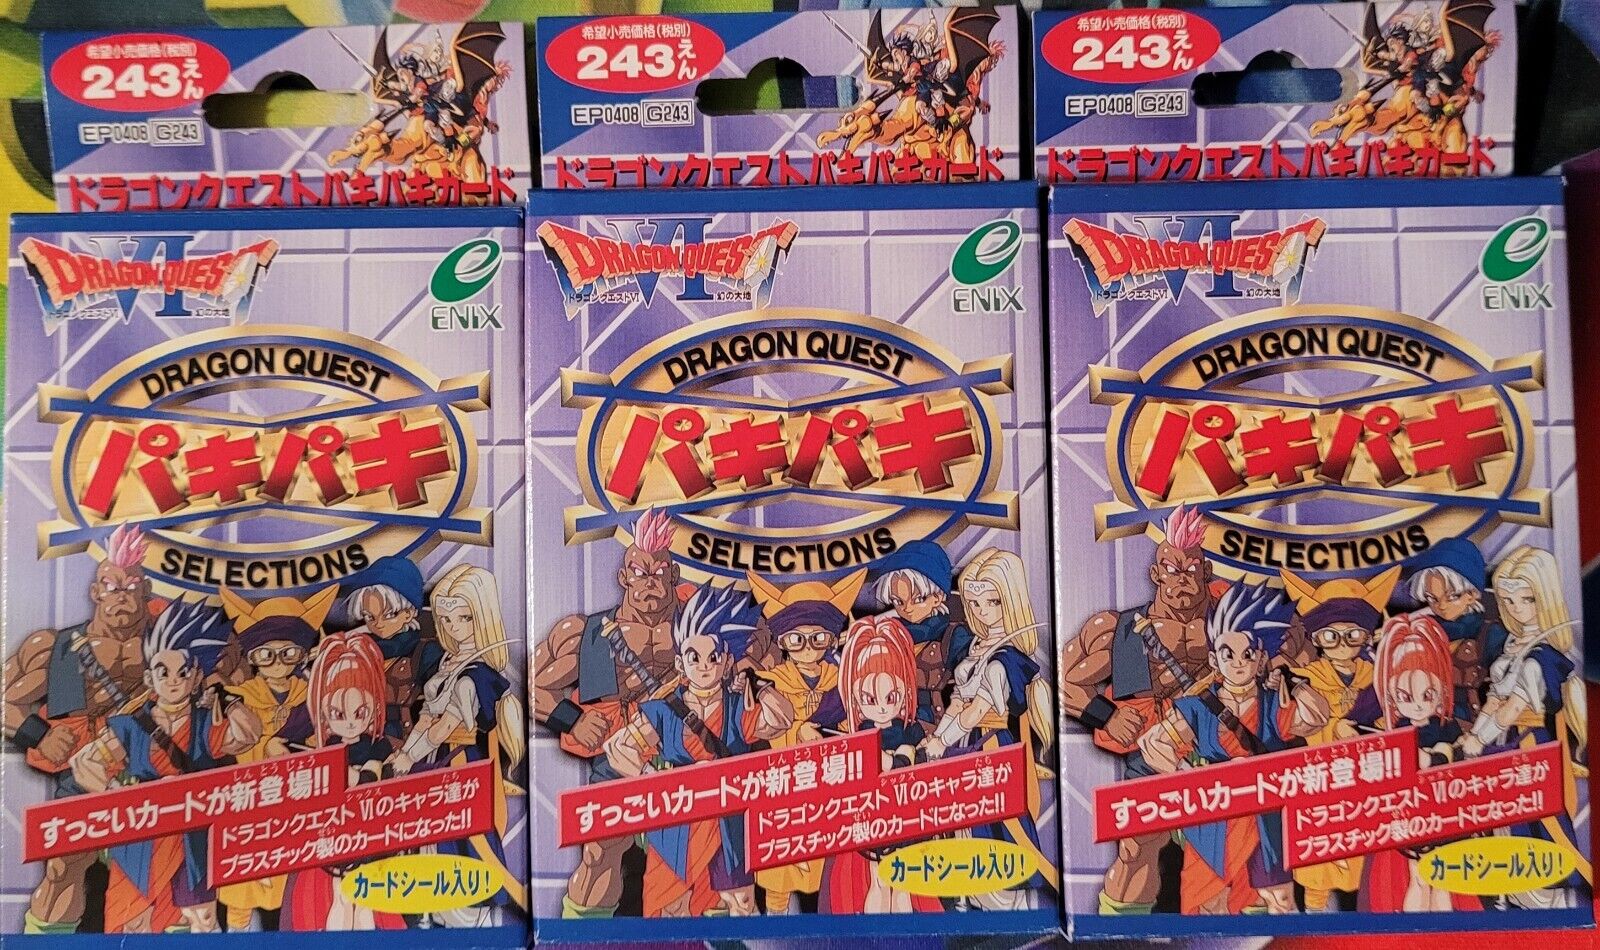 3x 1996 ENIX Dragon Quest VI: Dragon Quest Selections blind boxes (opened)